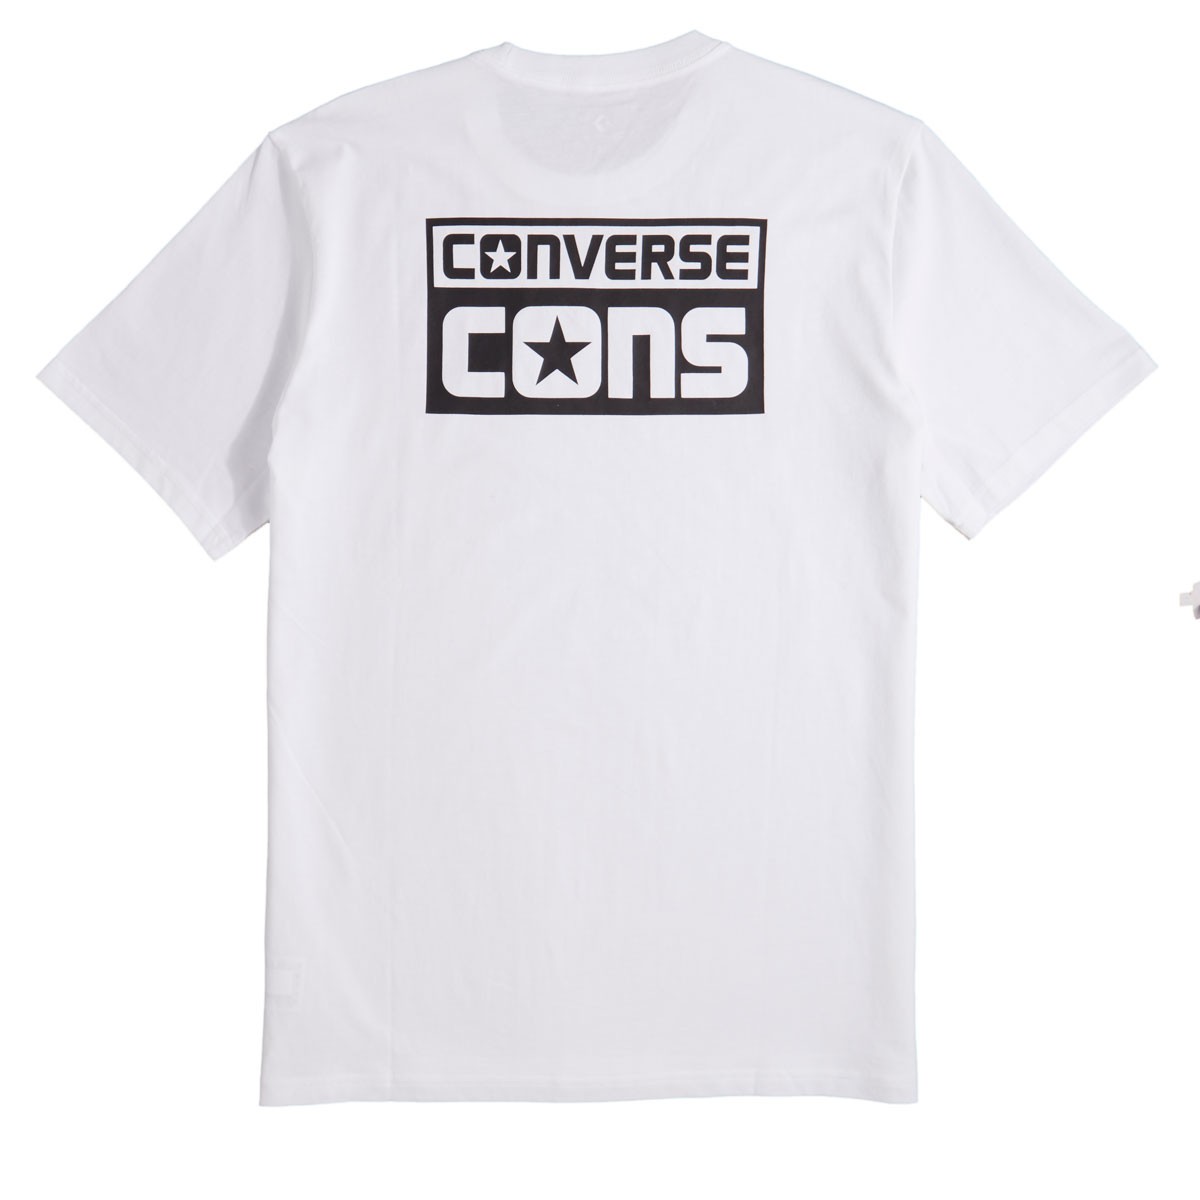 white converse t shirt